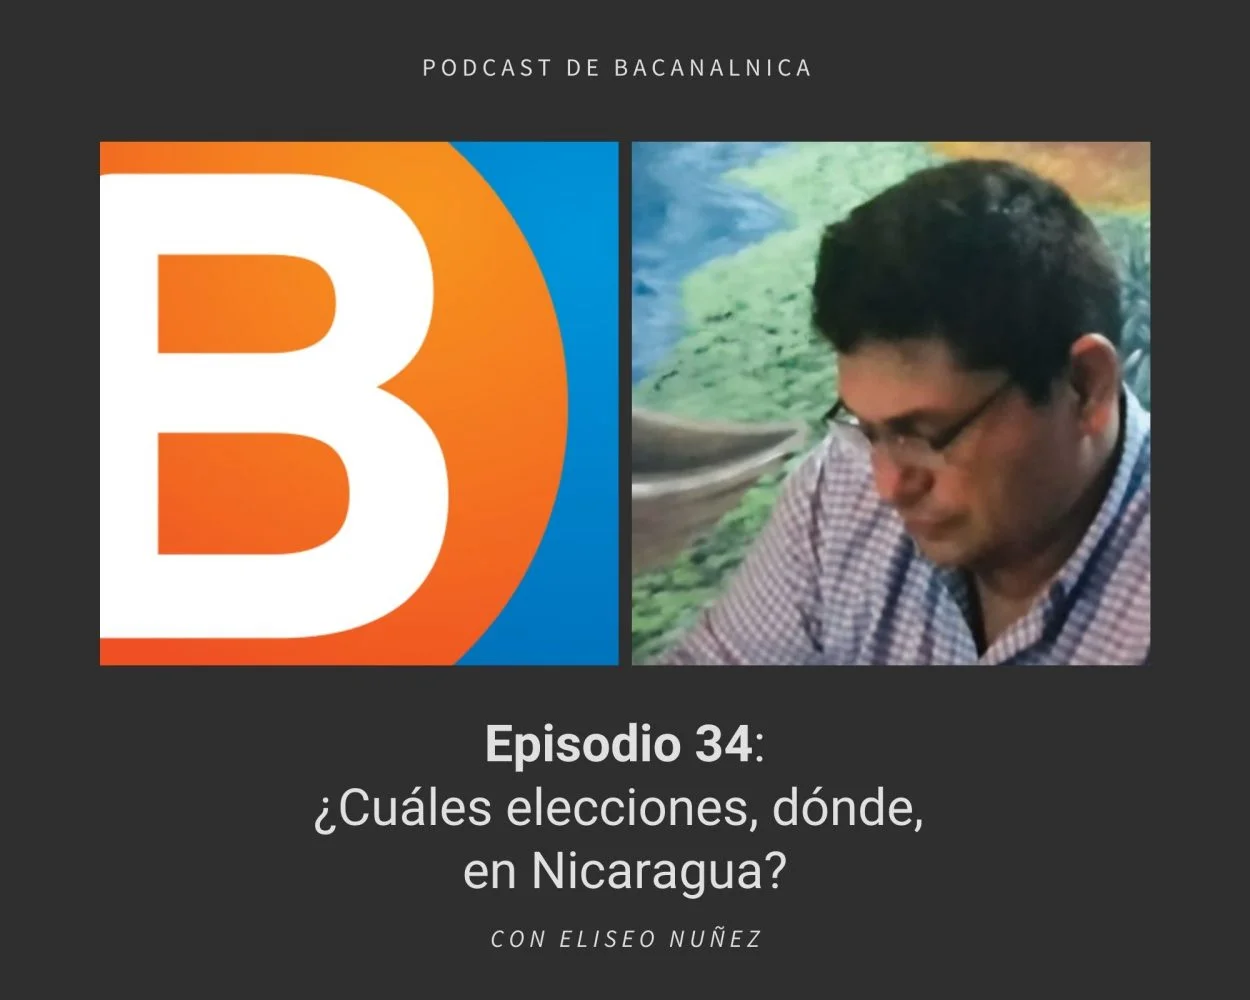 Episodio 34 del podcast de Bacanalnica, con Eliseo Nuñez